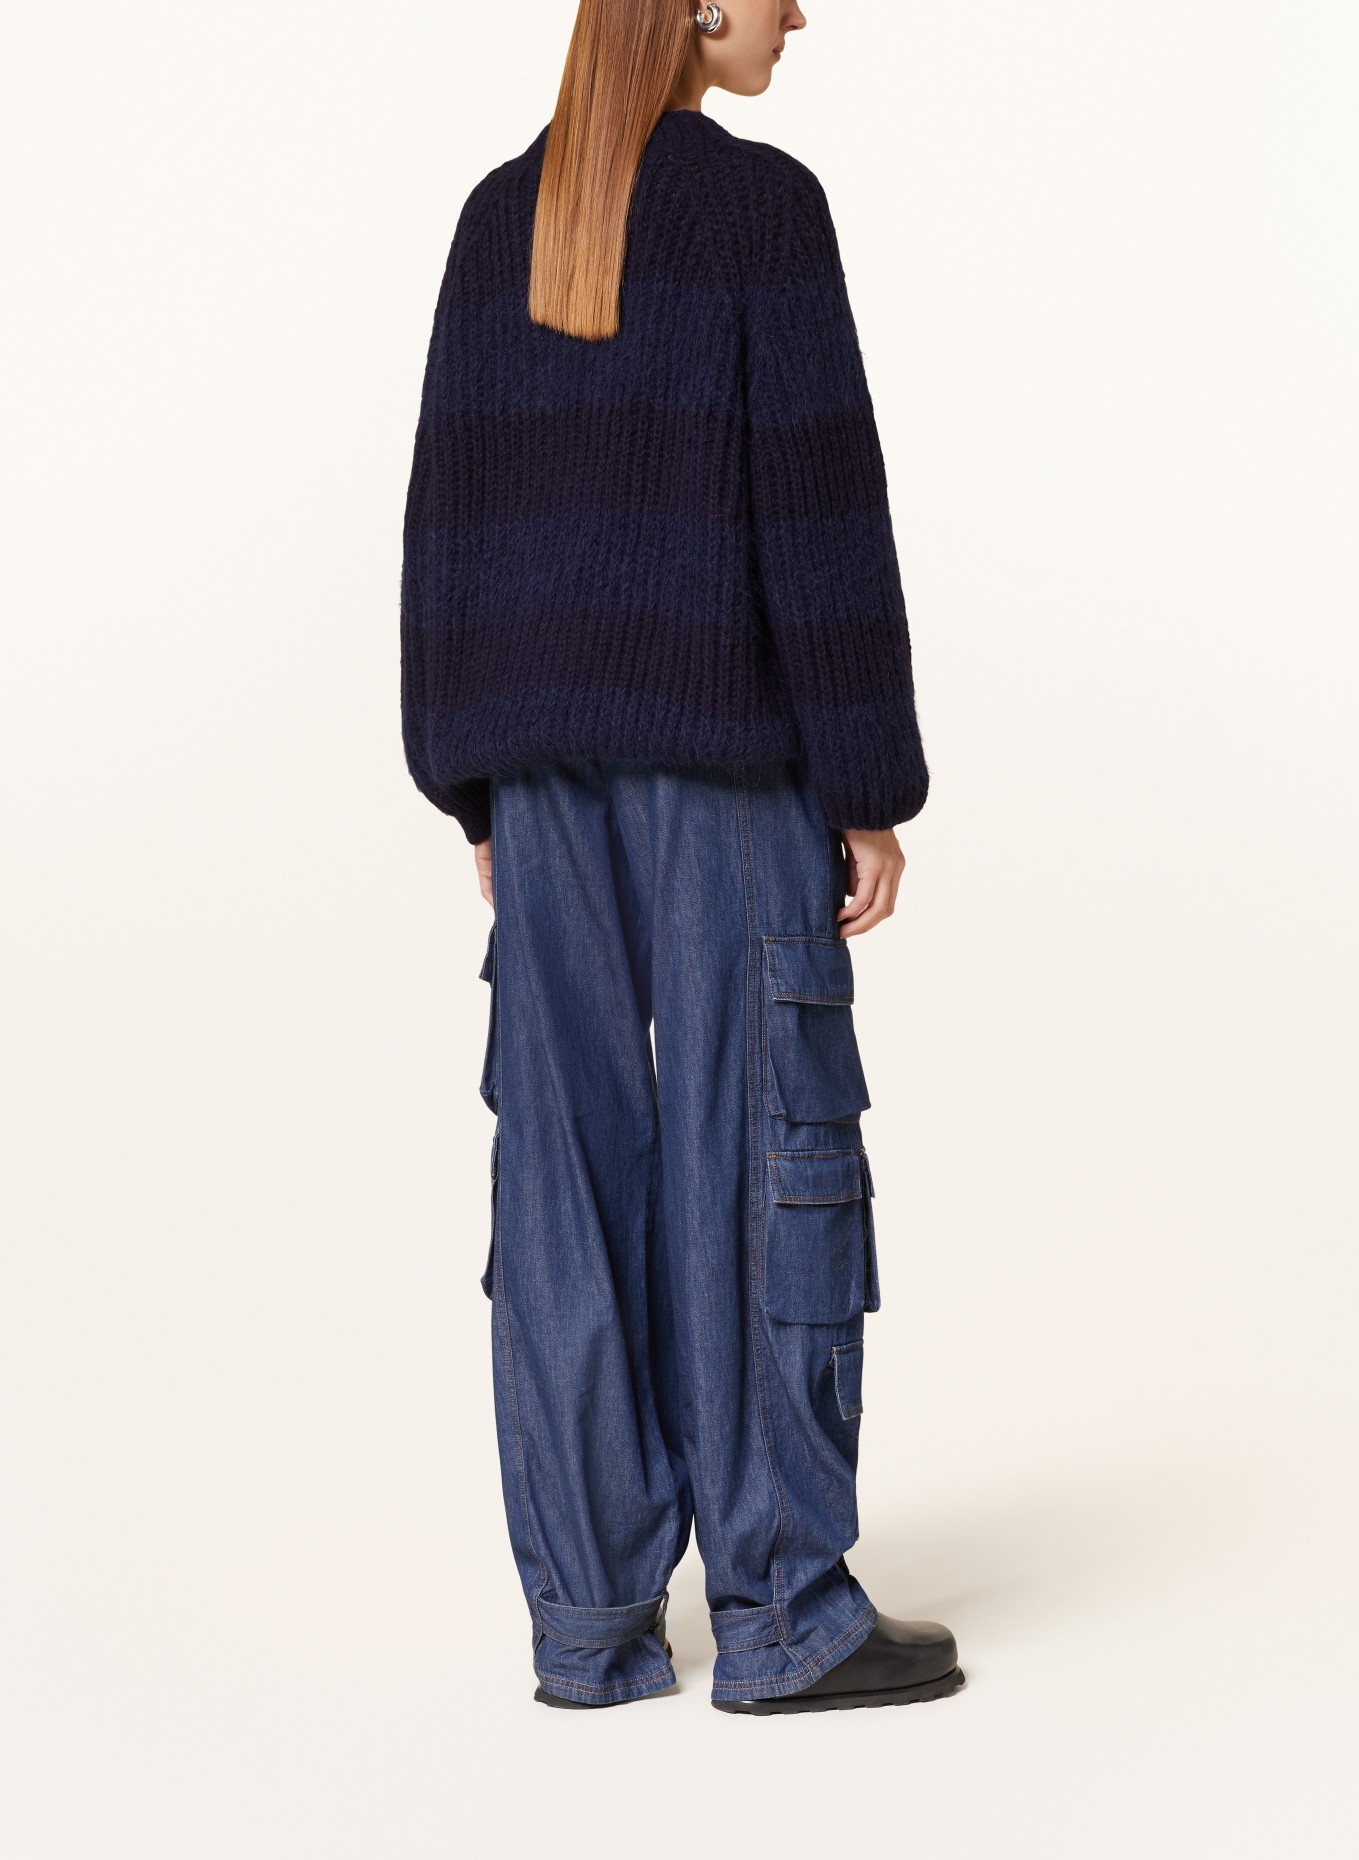 MAIAMI Pullover mit Alpaka, Farbe: DUNKELBLAU (Bild 3)